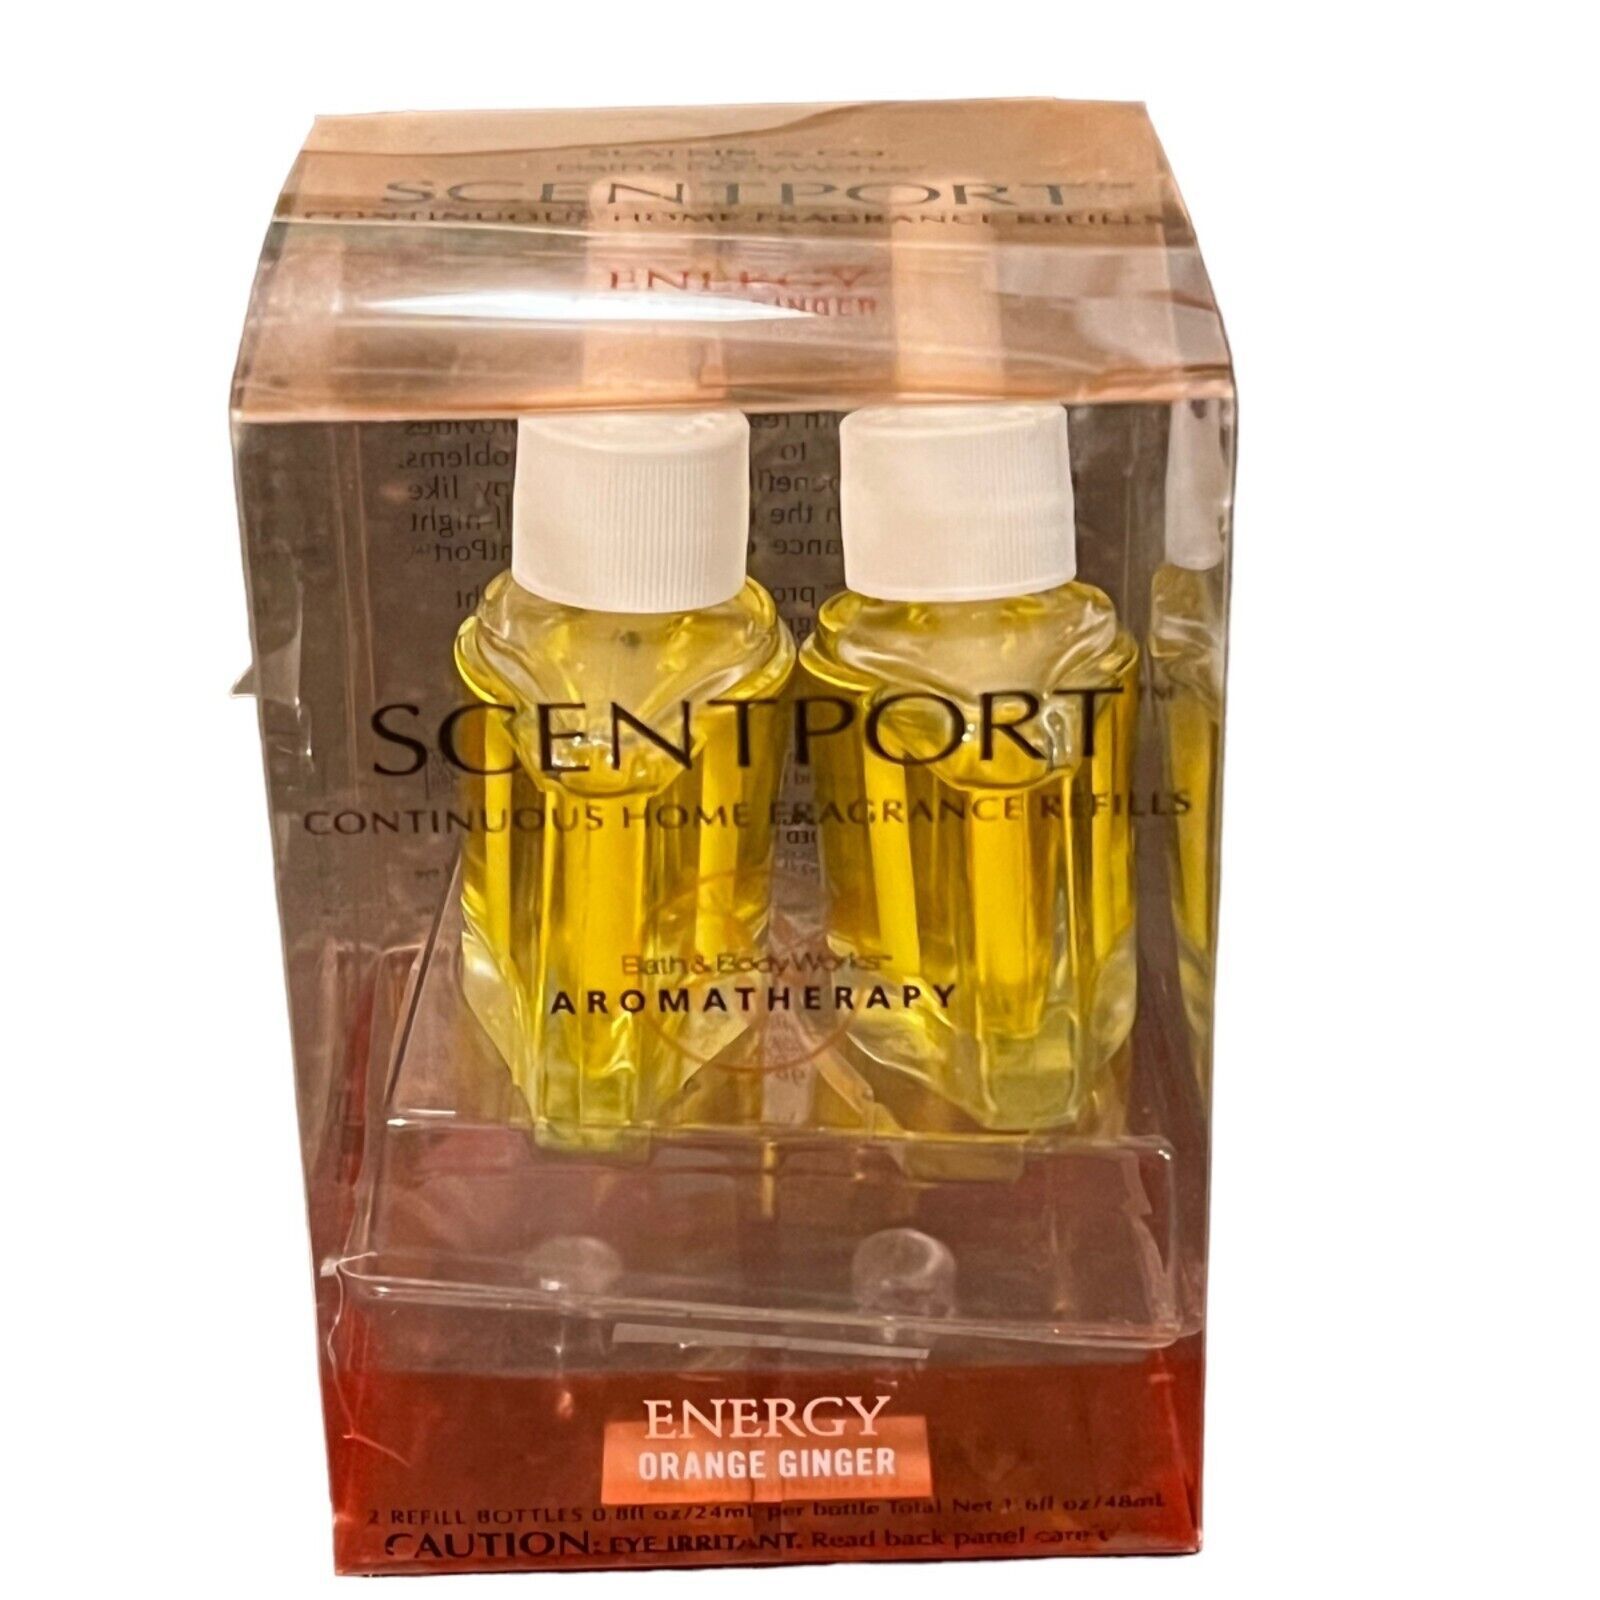 Bath & Body Works Aromatherapy Scentport Refills (2) Energy Orange Ginger - $28.80